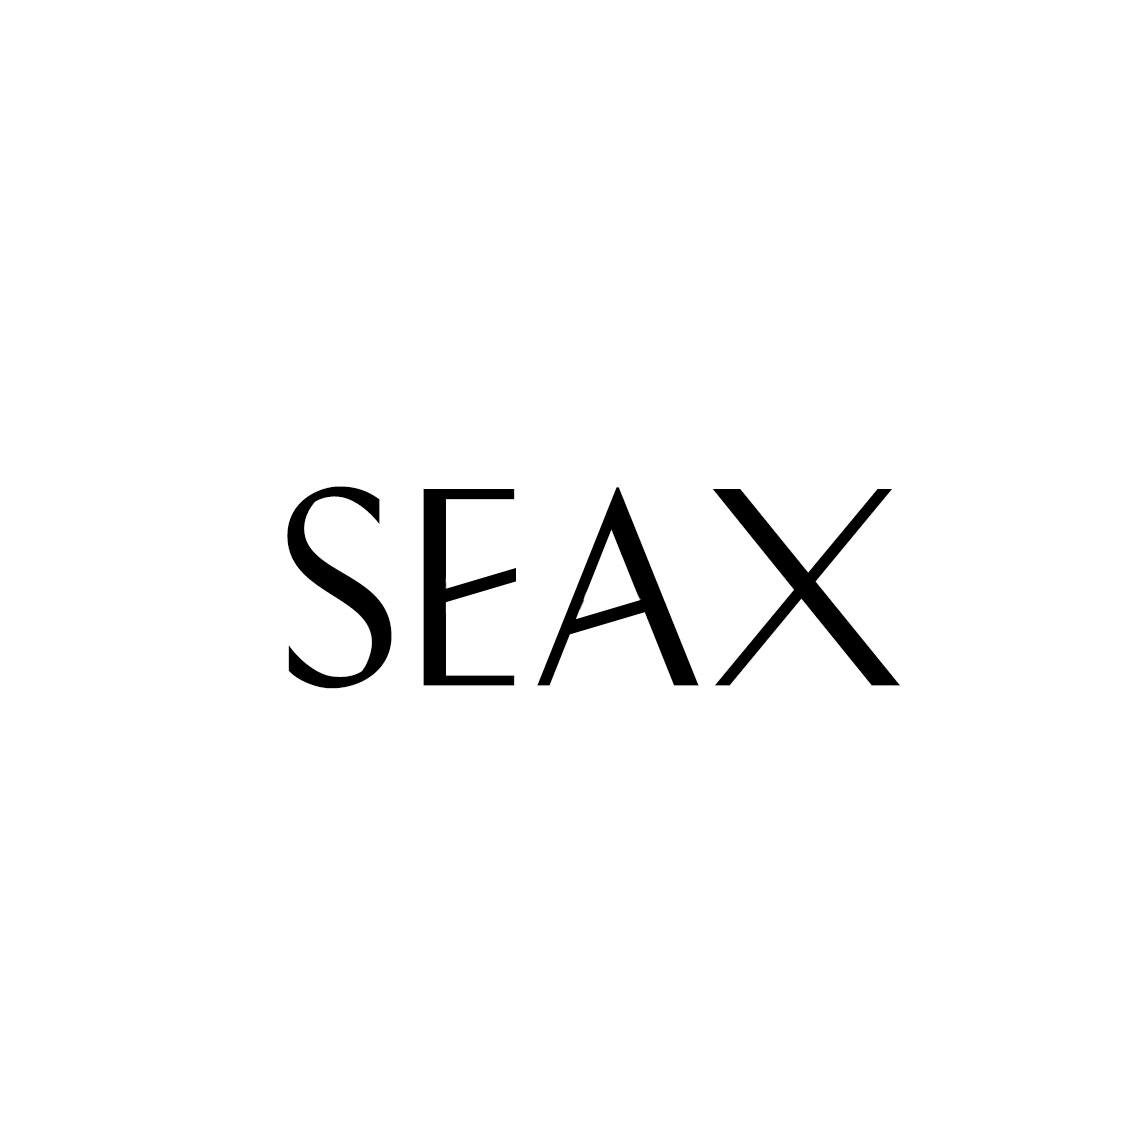 SEAX